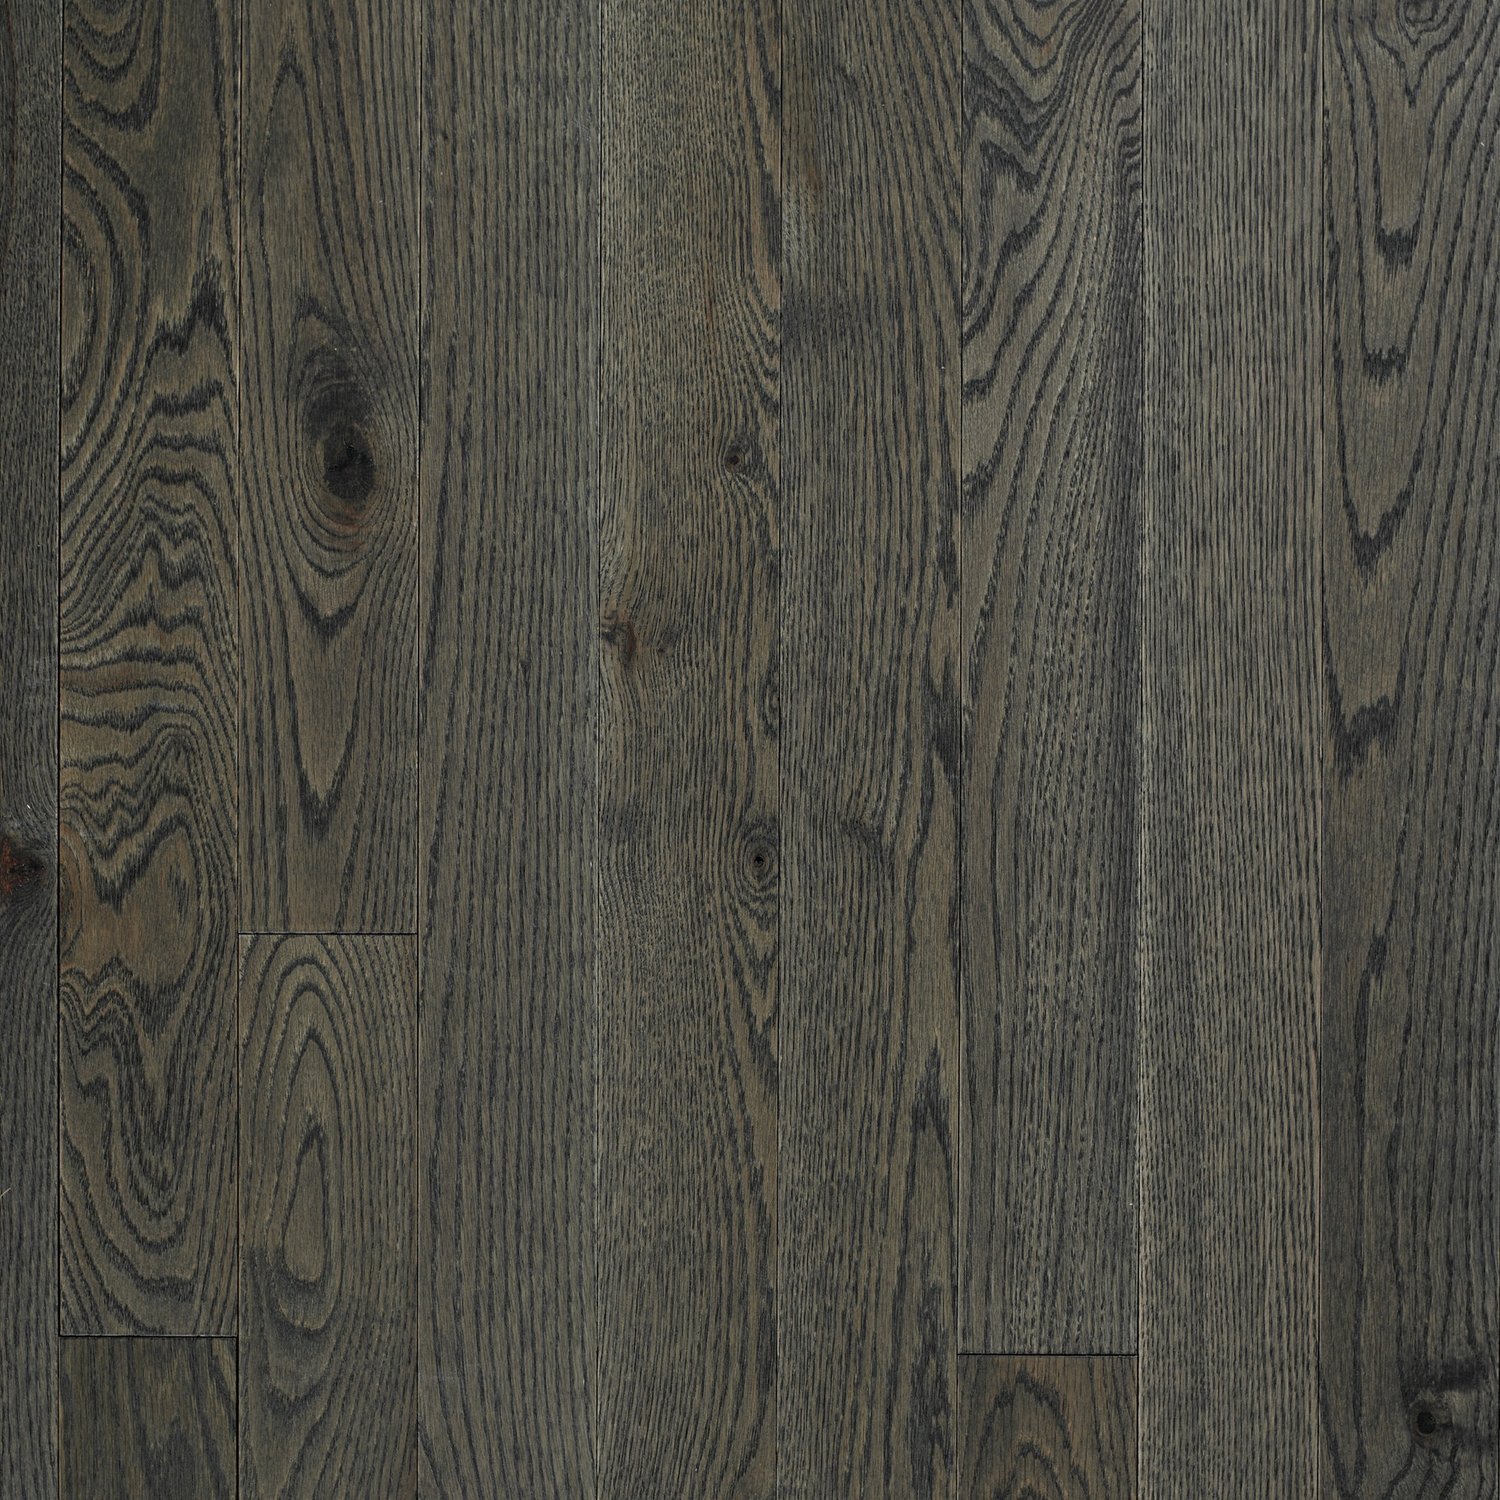 Pewter Red Oak Boardwalk Hardwood Floors, Pewter Maple Hardwood Flooring